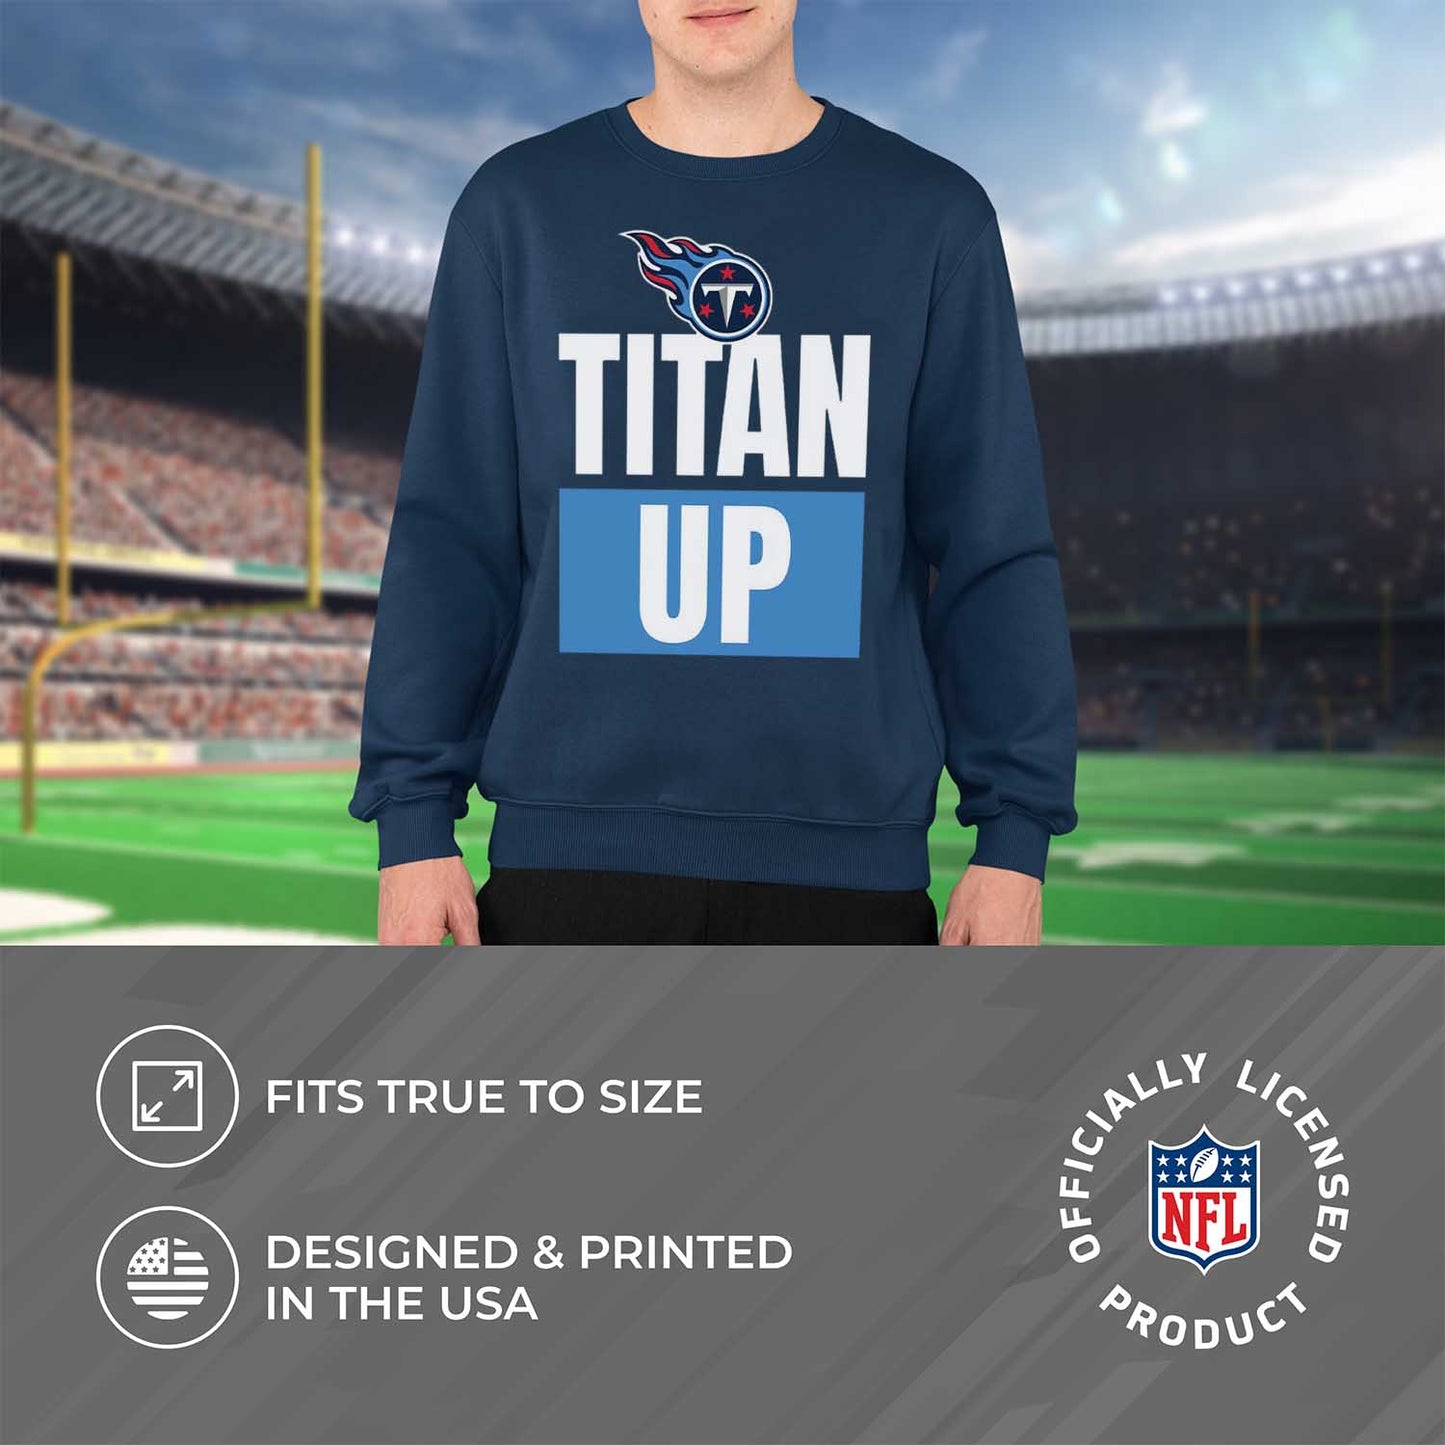 Tennessee Titans NFL Adult Slogan Crewneck Sweatshirt - Navy